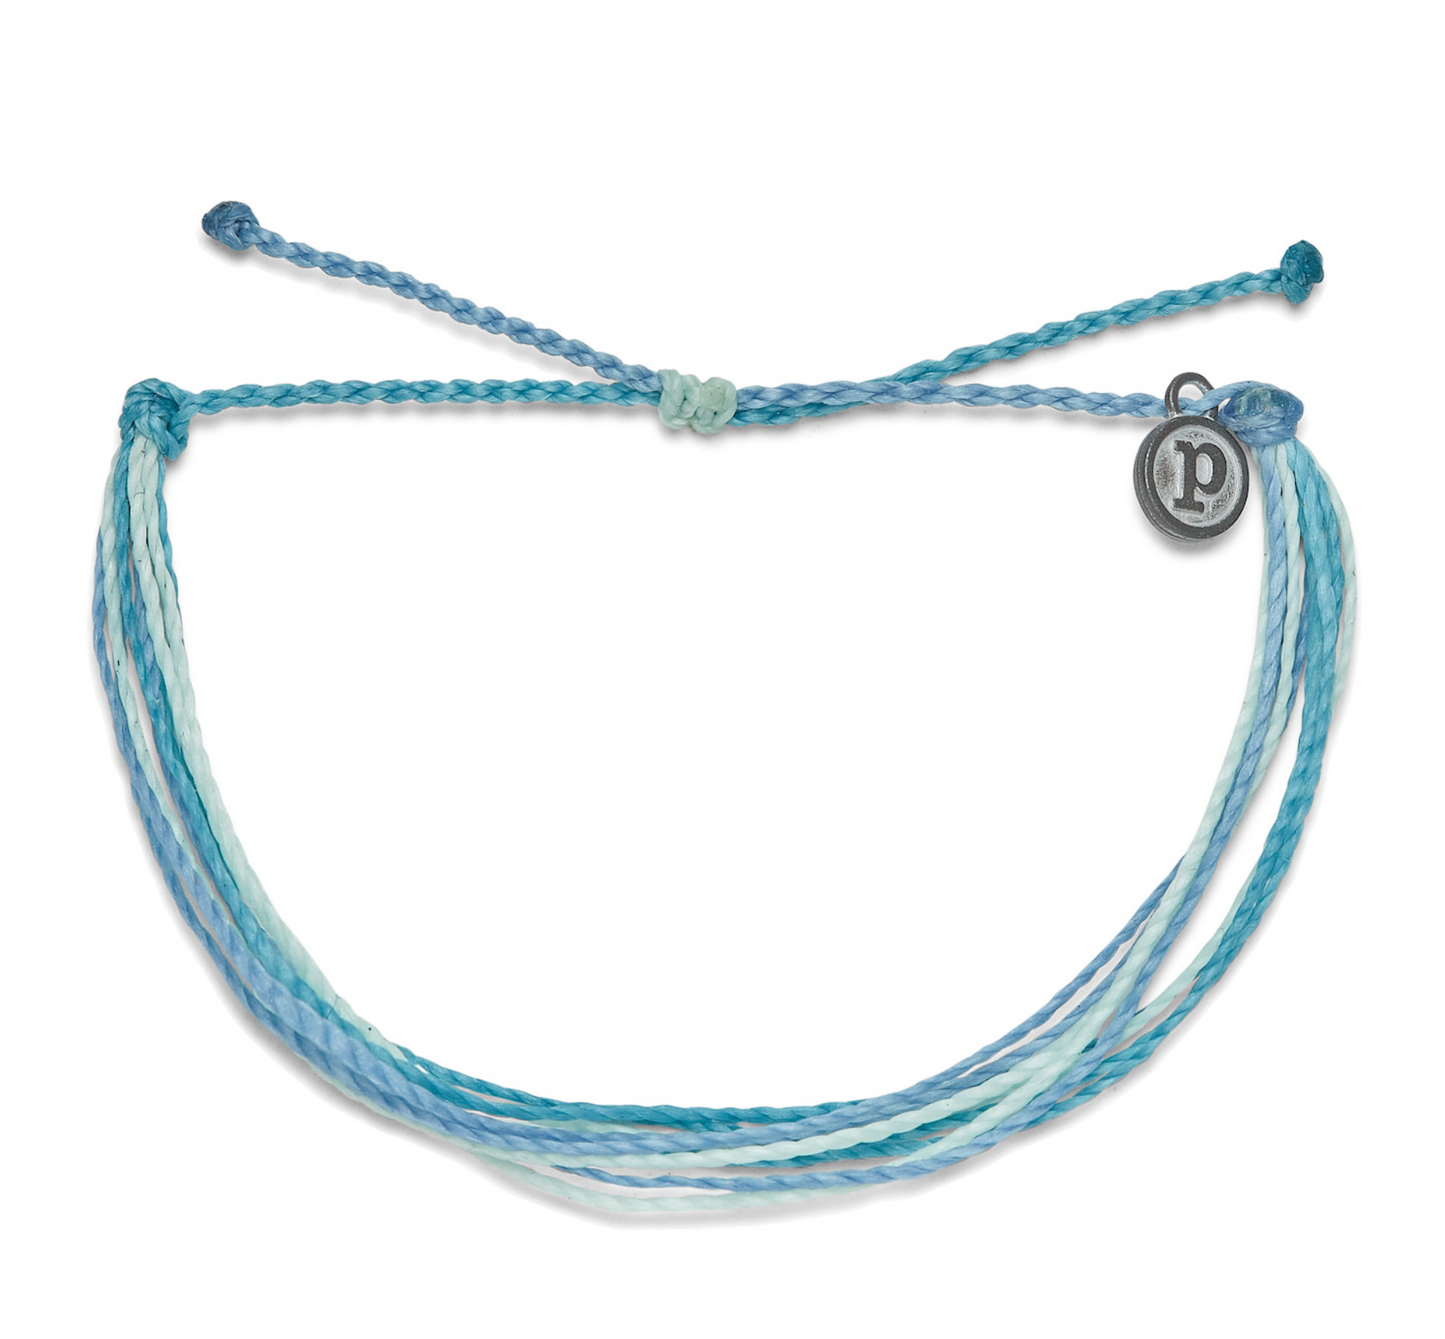 PURAVIDA Original Bracelet in Blue Swell - The Street Boutique 